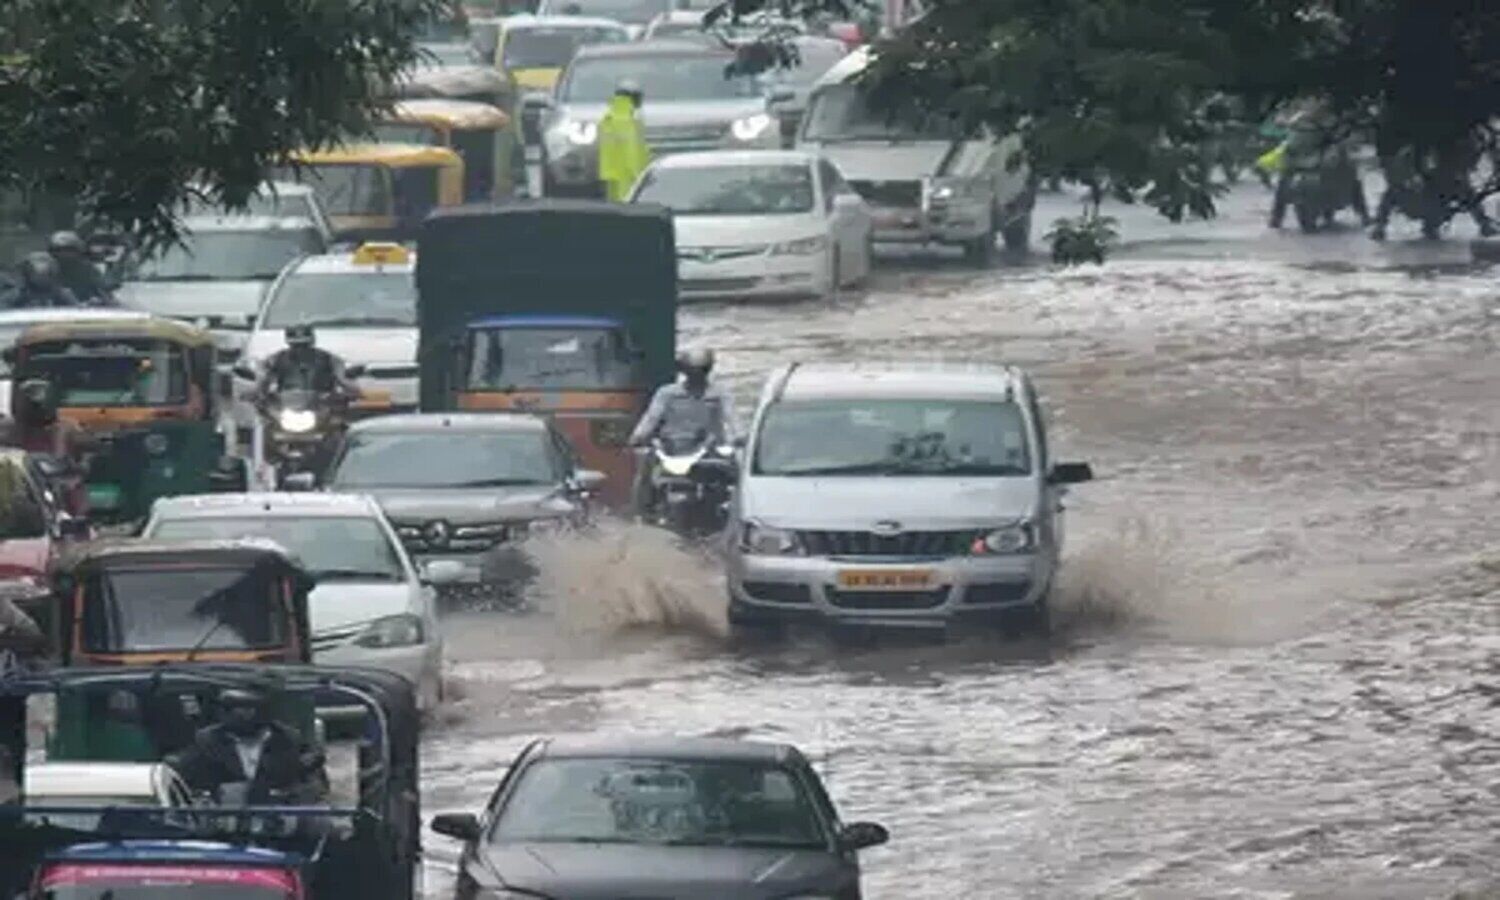 Bengaluru Heavy Rain: Heavy rains and water logging in bad condition for IT hub Bengaluru